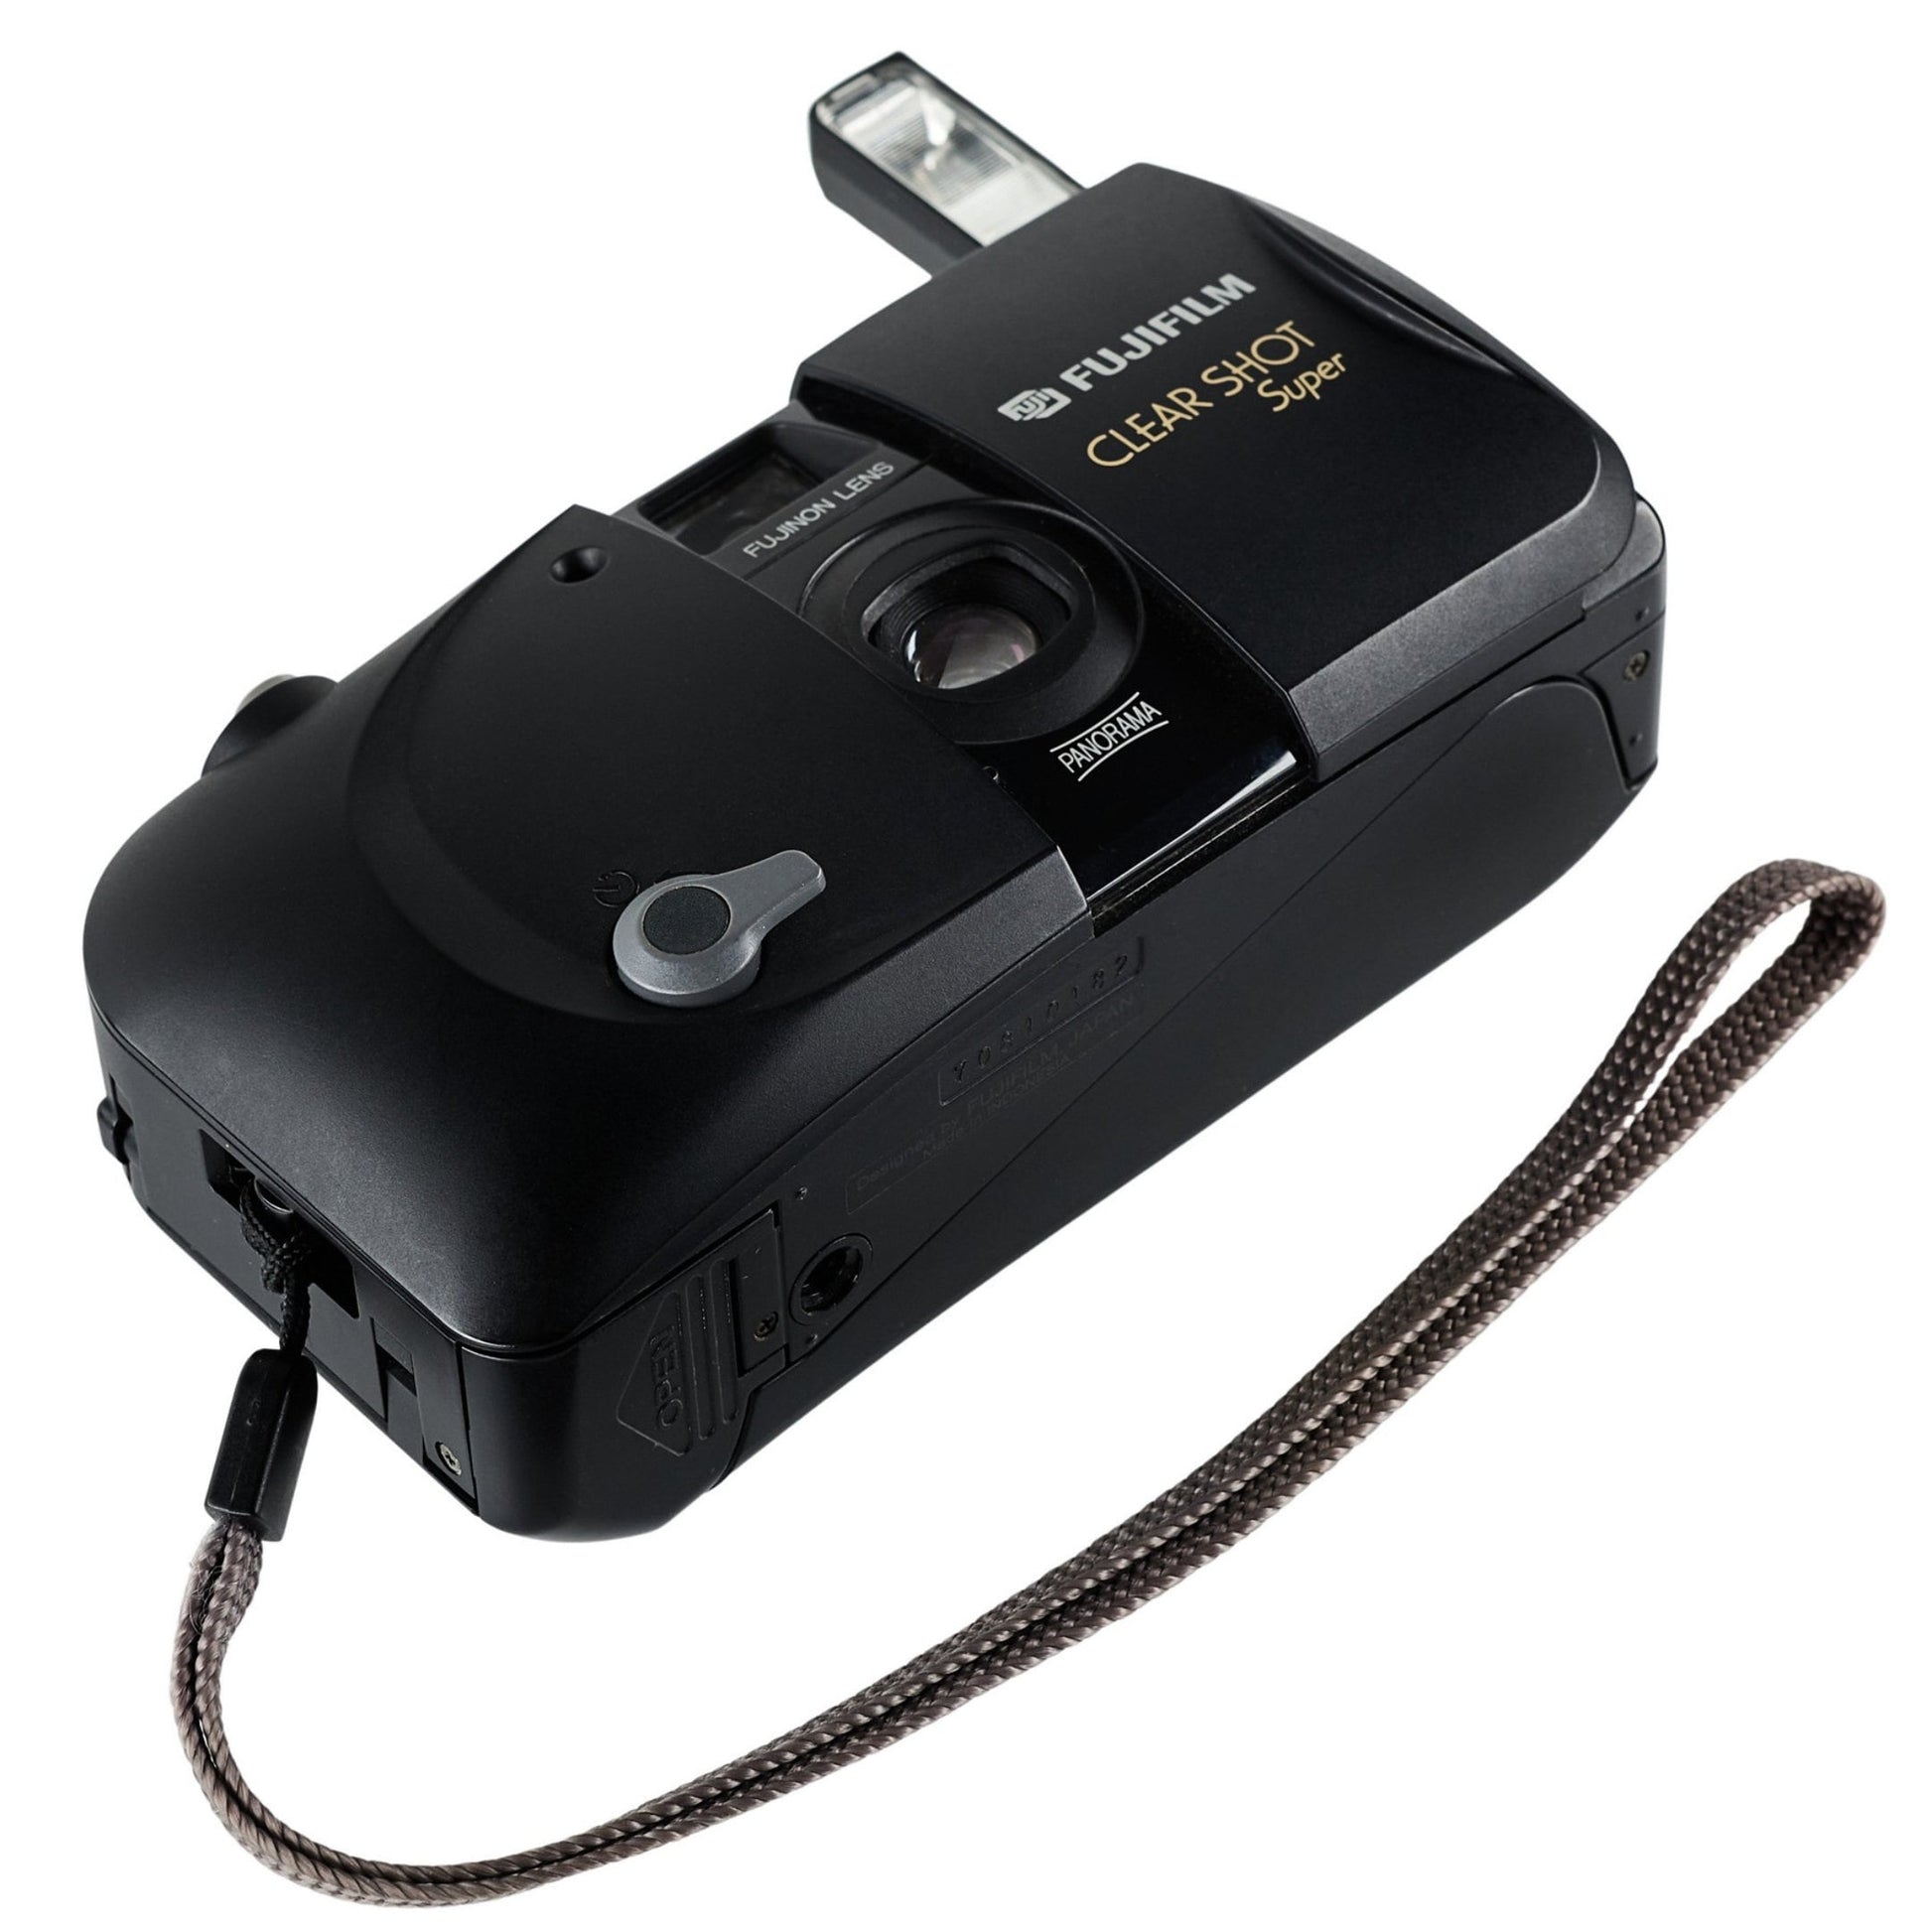 NEW ARRIVAL!! Fujifilm Clearshot Super, Working Film Camera, Vintage Camera - Vintage Polaroid Instant Cameras